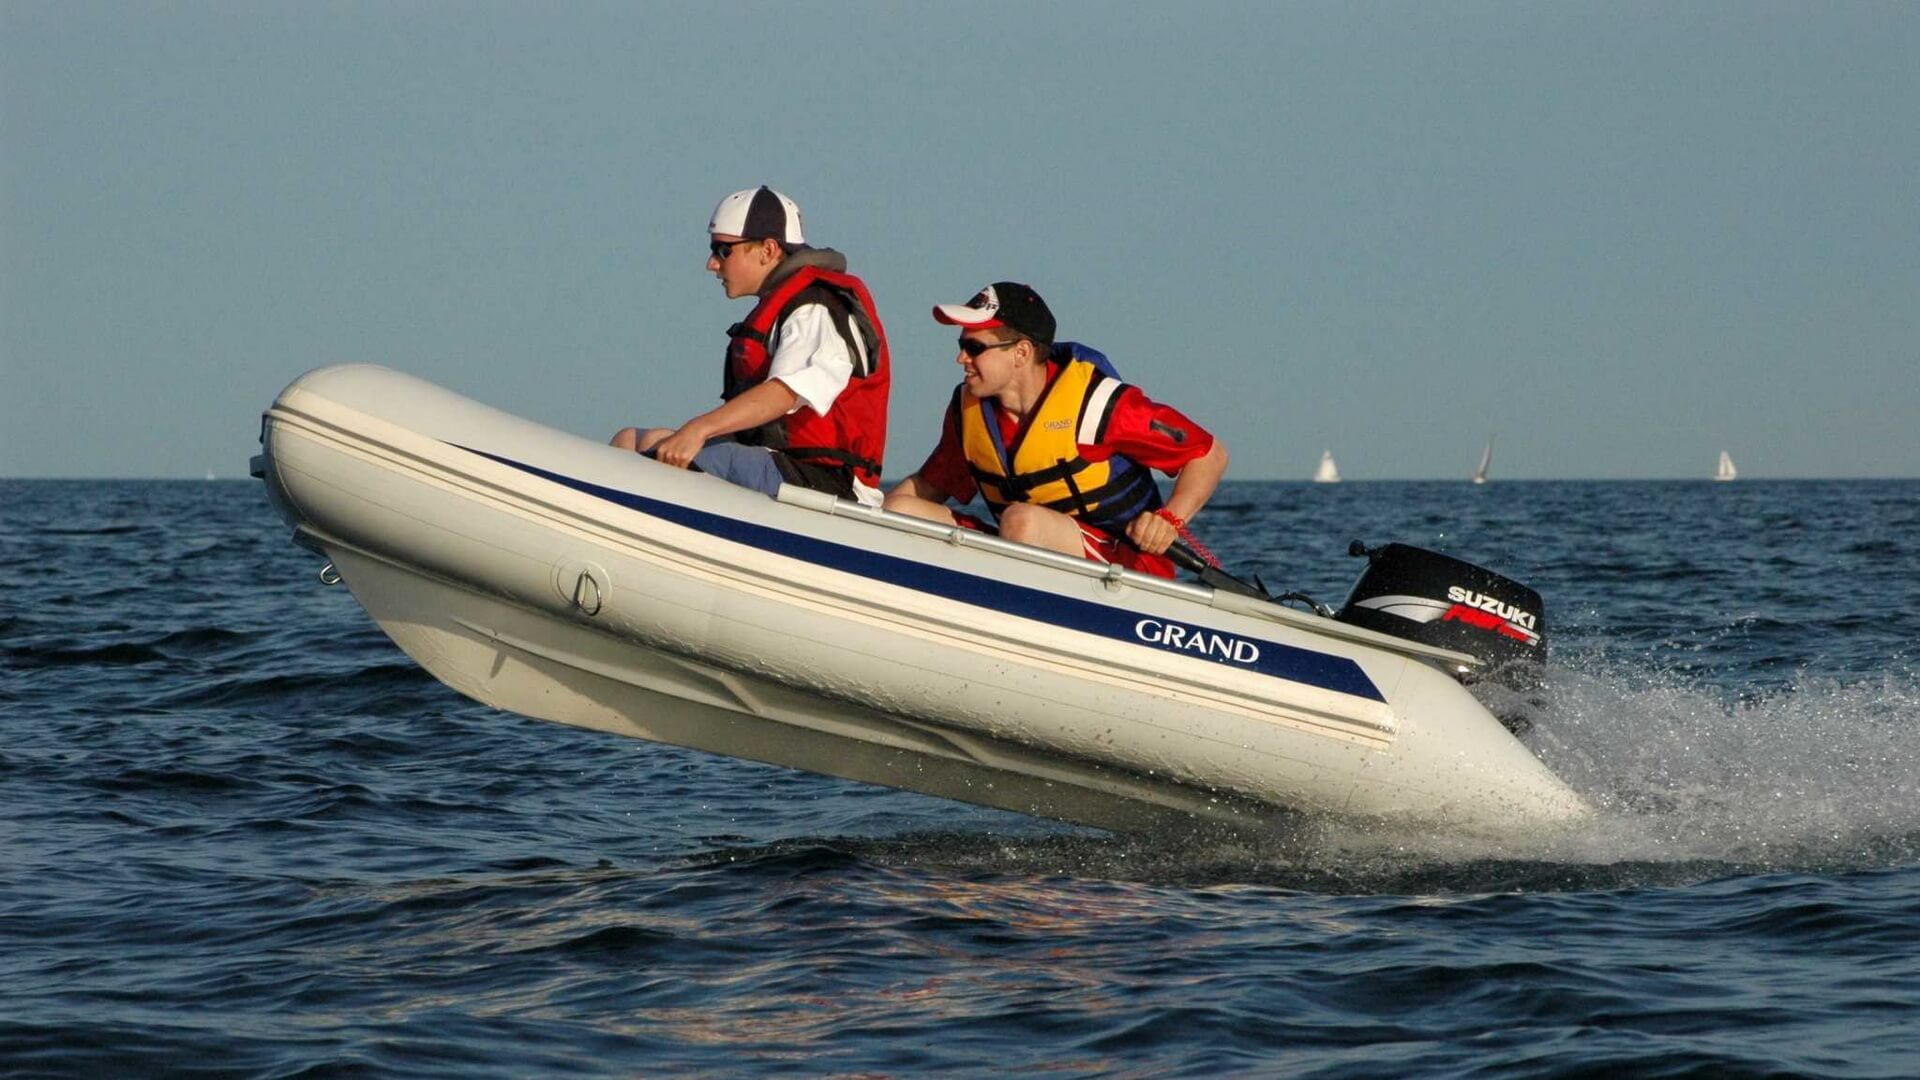 Надувная лодка с жестким дном GRAND Silver Line S300, Надувная лодка GRAND Silver Line S300, GRAND Silver Line S300, GRAND S300, GRAND Silver Line S300F, GRAND S300F, Надувная лодка GRAND, Надувная лодка ГРАНД, Надувная лодка с жестким дном, RIB, Rigid Inflatable Boats